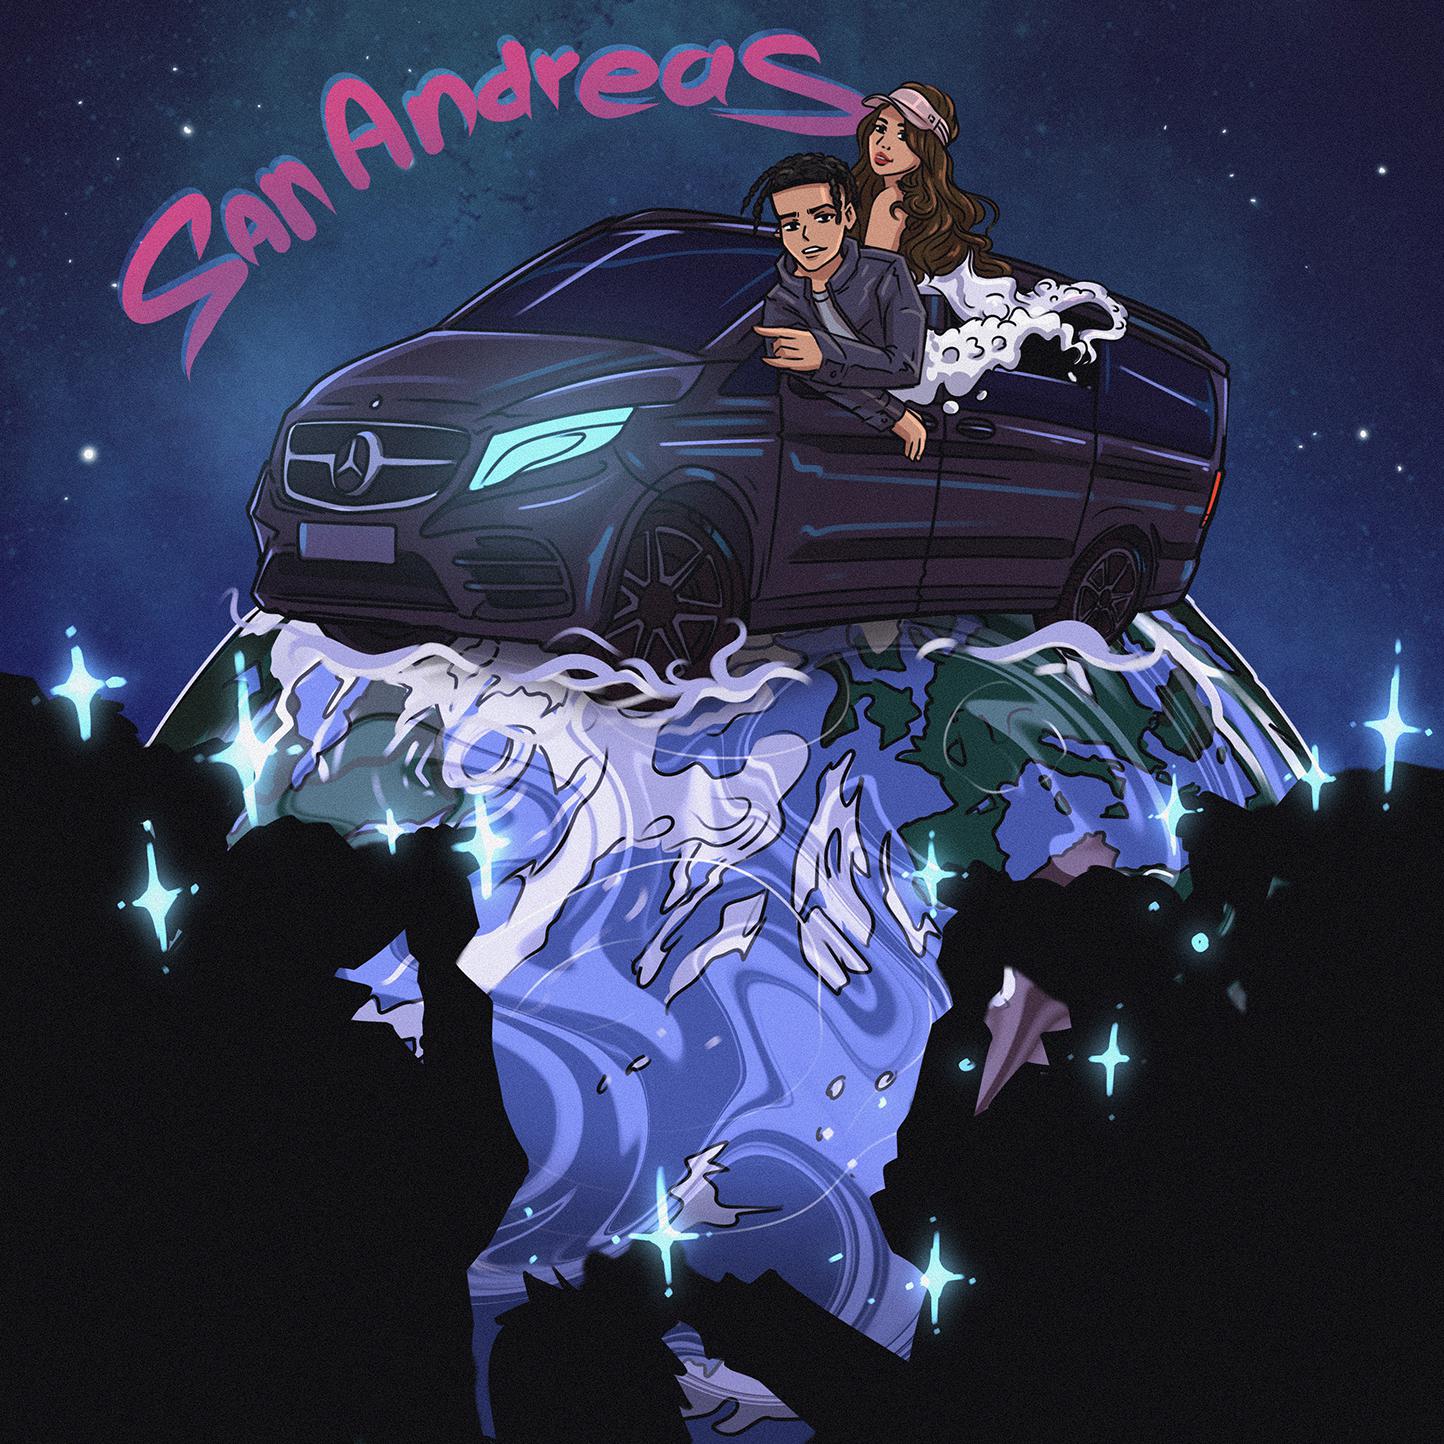 Постер альбома SAN ANDREAS